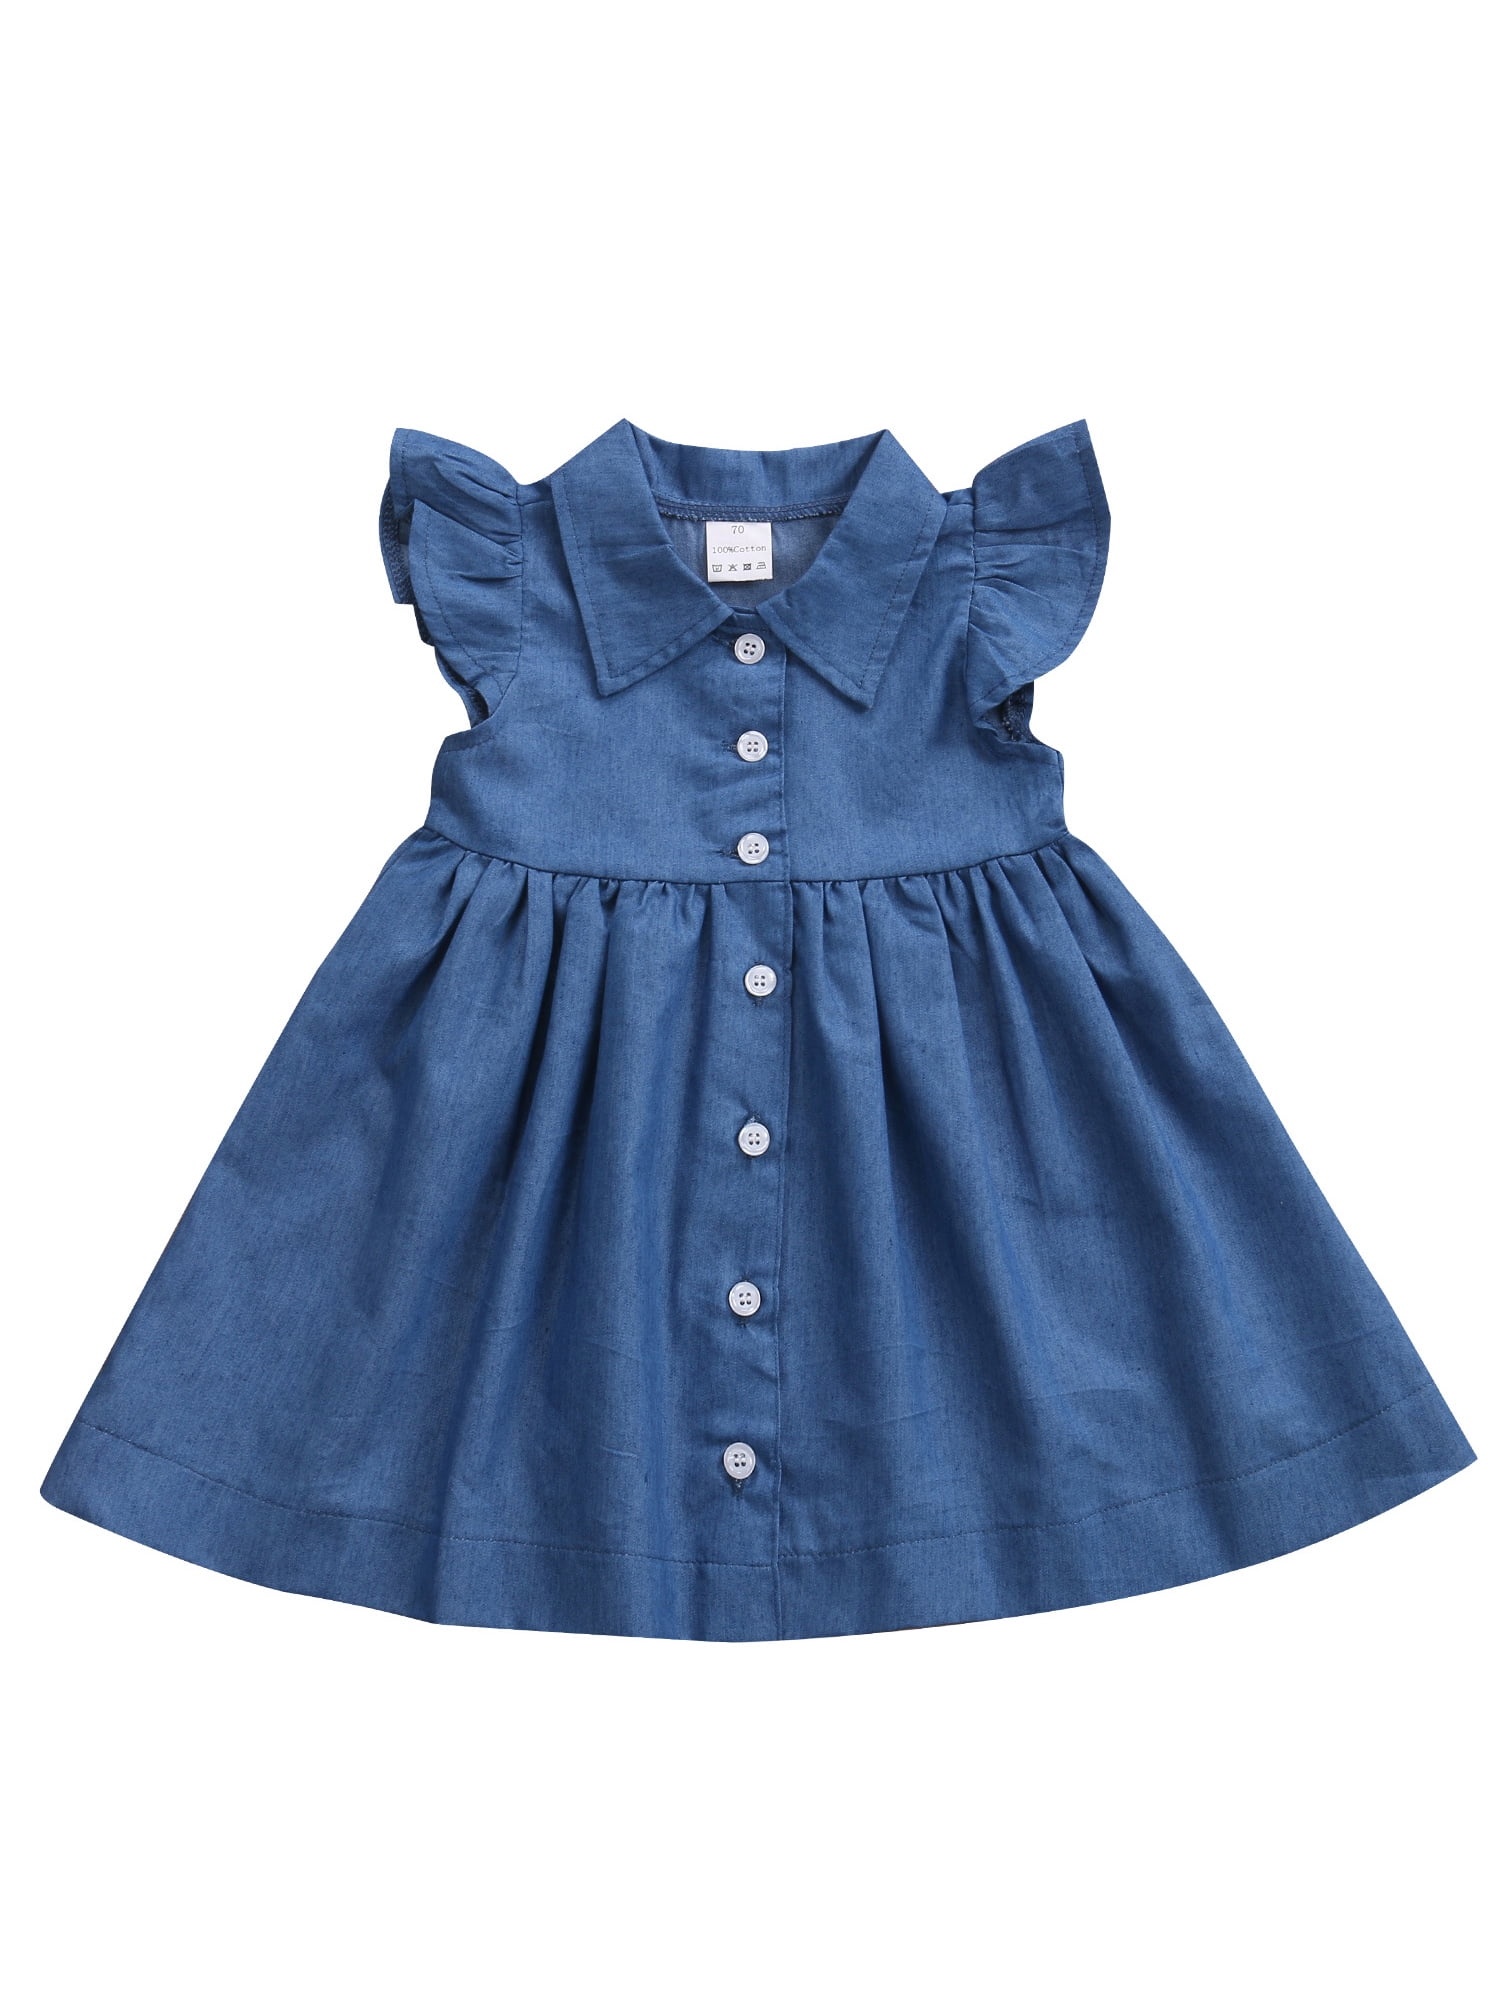 Hirigin - Cute Baby Girls Kid Toddler Denim Dress Summer Ruffle Sleeve ...